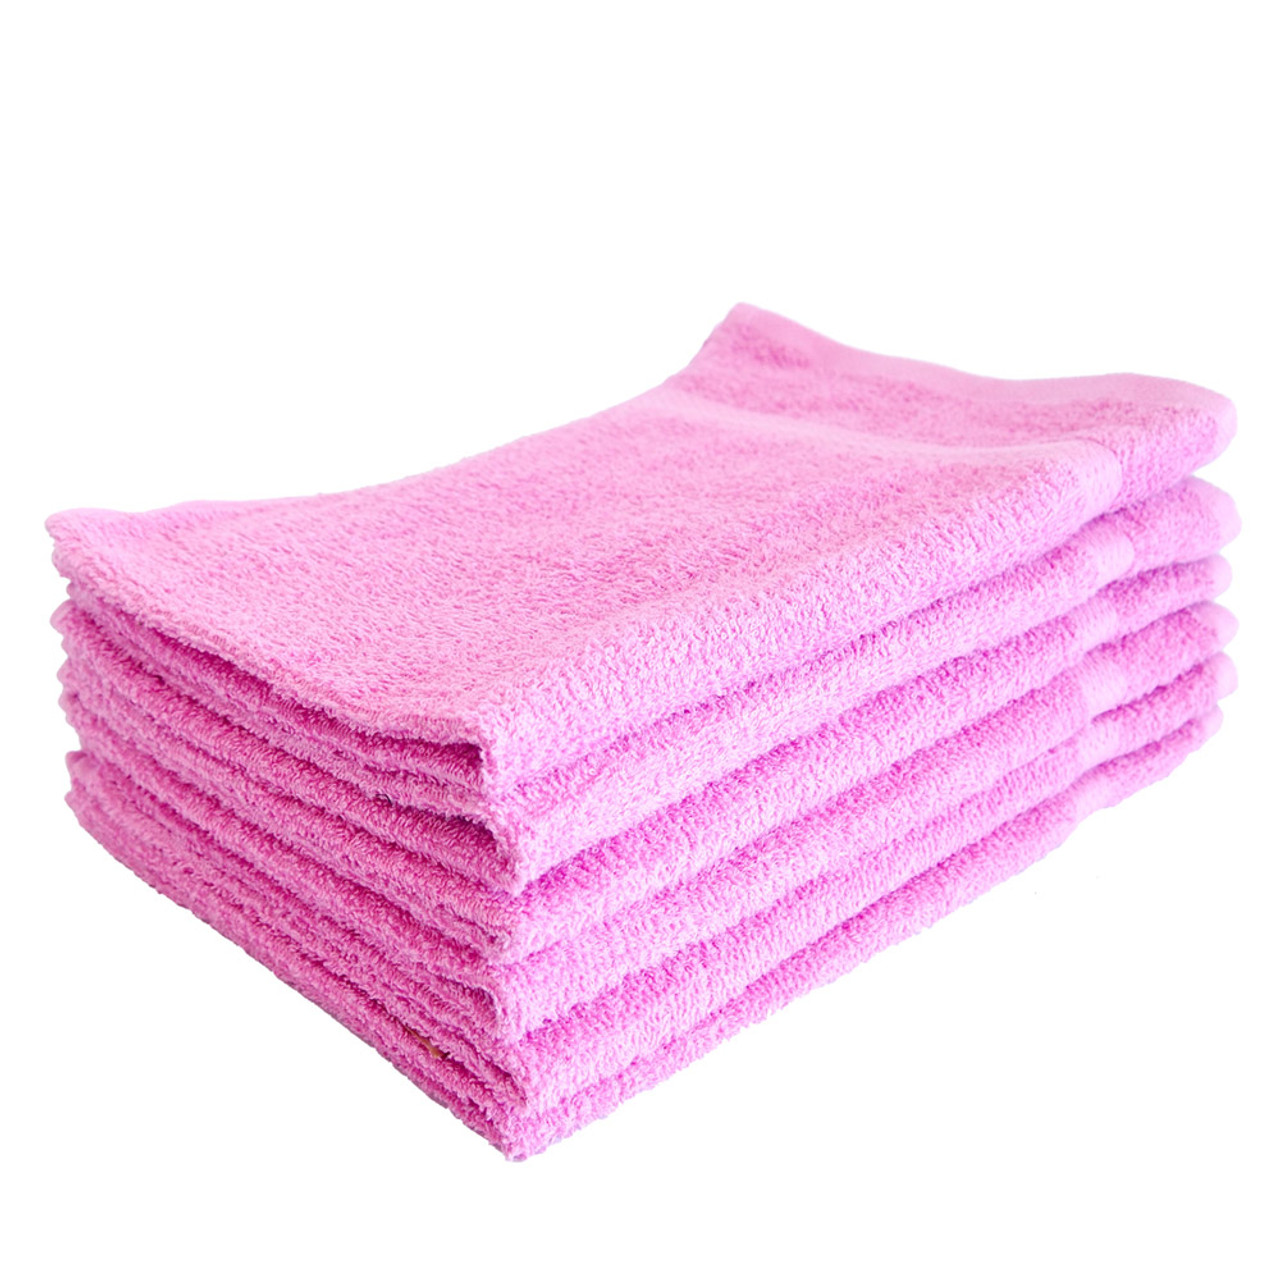 15x25 Premium Hot Pink Hand Towels